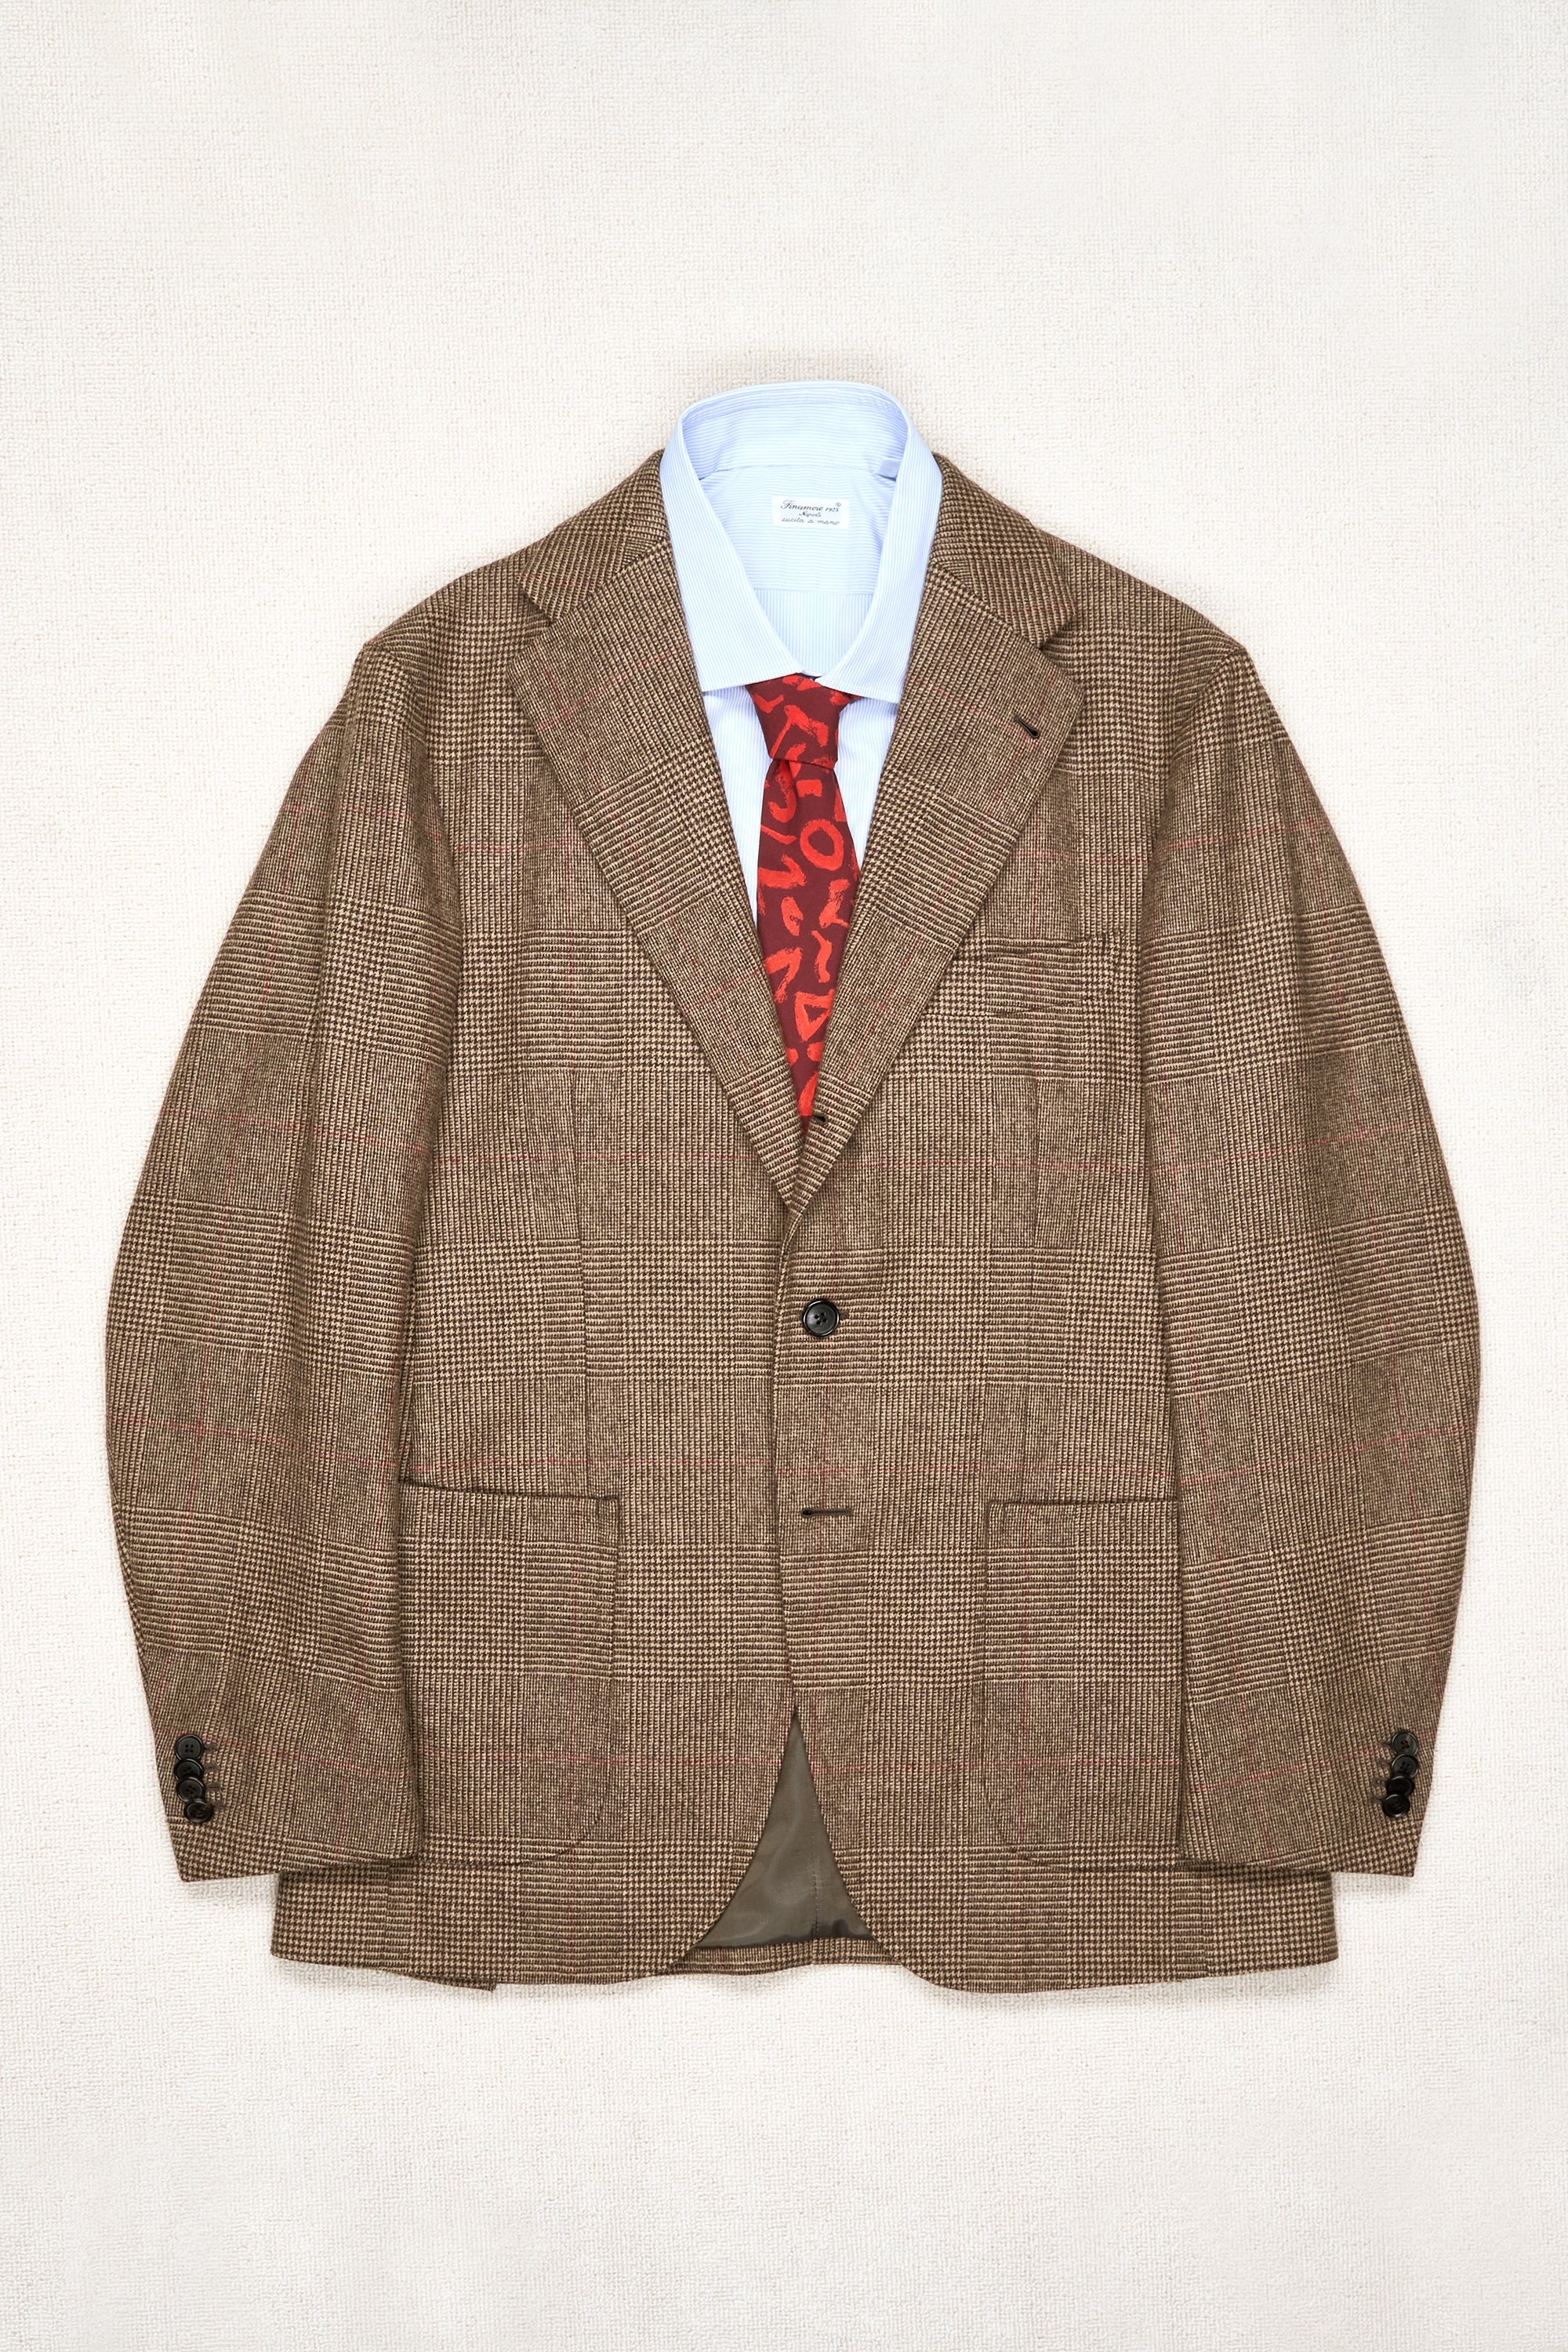 Casa Del Sarto Brown/Beige/Red Prince of Wales Check Wool Sport Coat